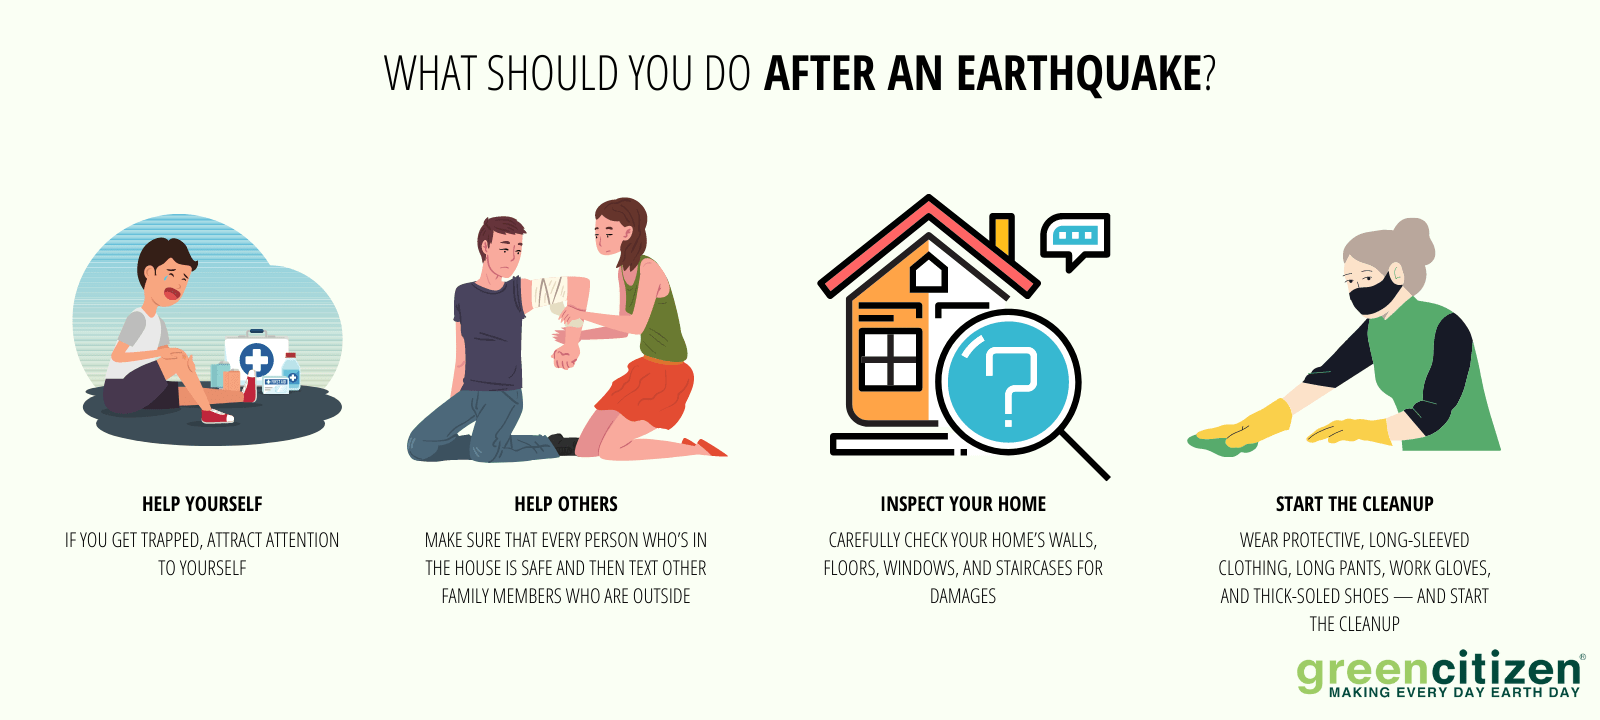 Earthquake safety after earthquake